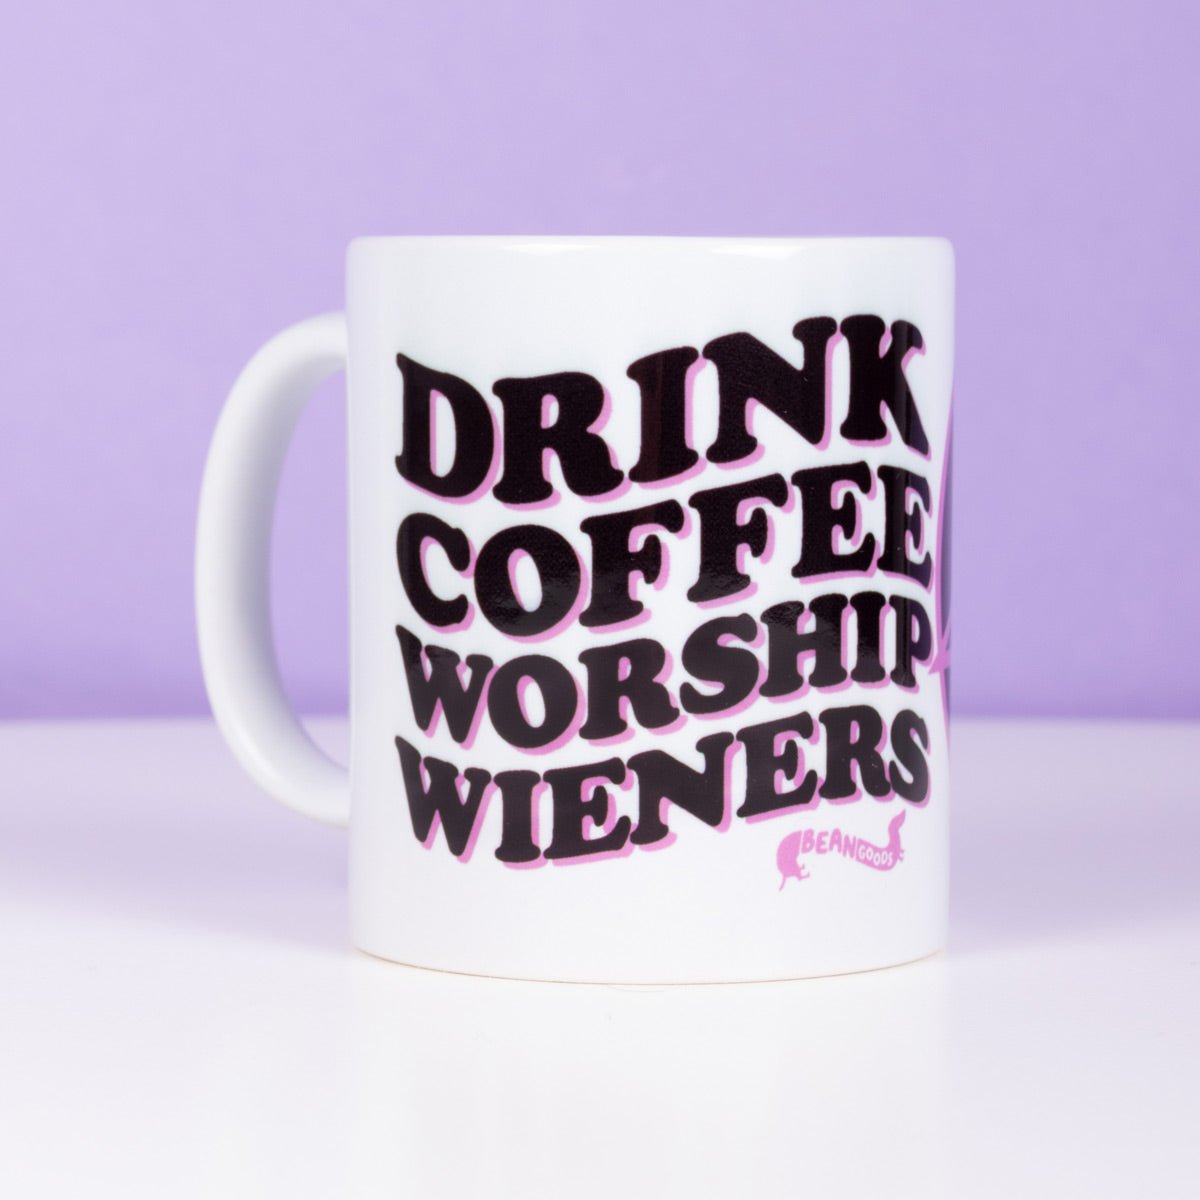 wiener worship mug - bean goods